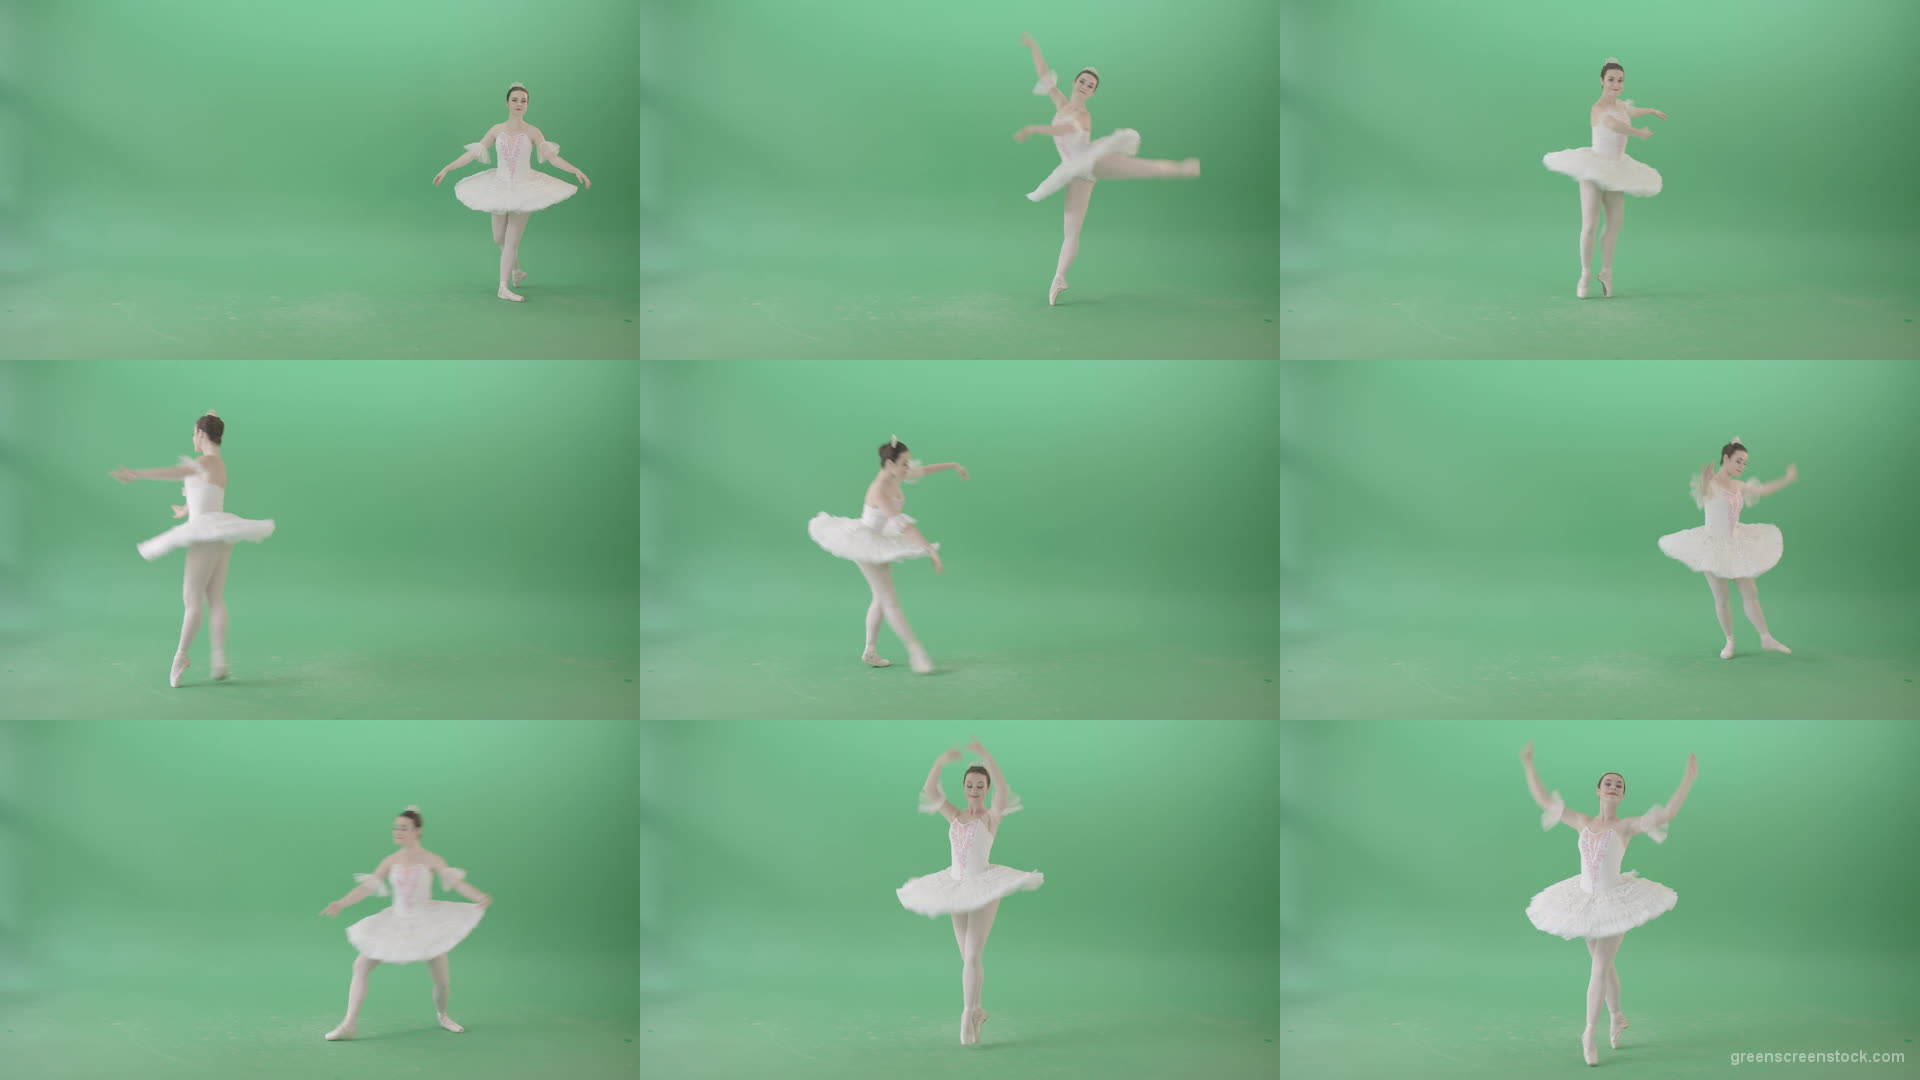 Flexibility-ballet-dancing-performance-girl-dancing-Classical-adagio-opera-on-green-screen-4K-Video-footage-1920 Green Screen Stock